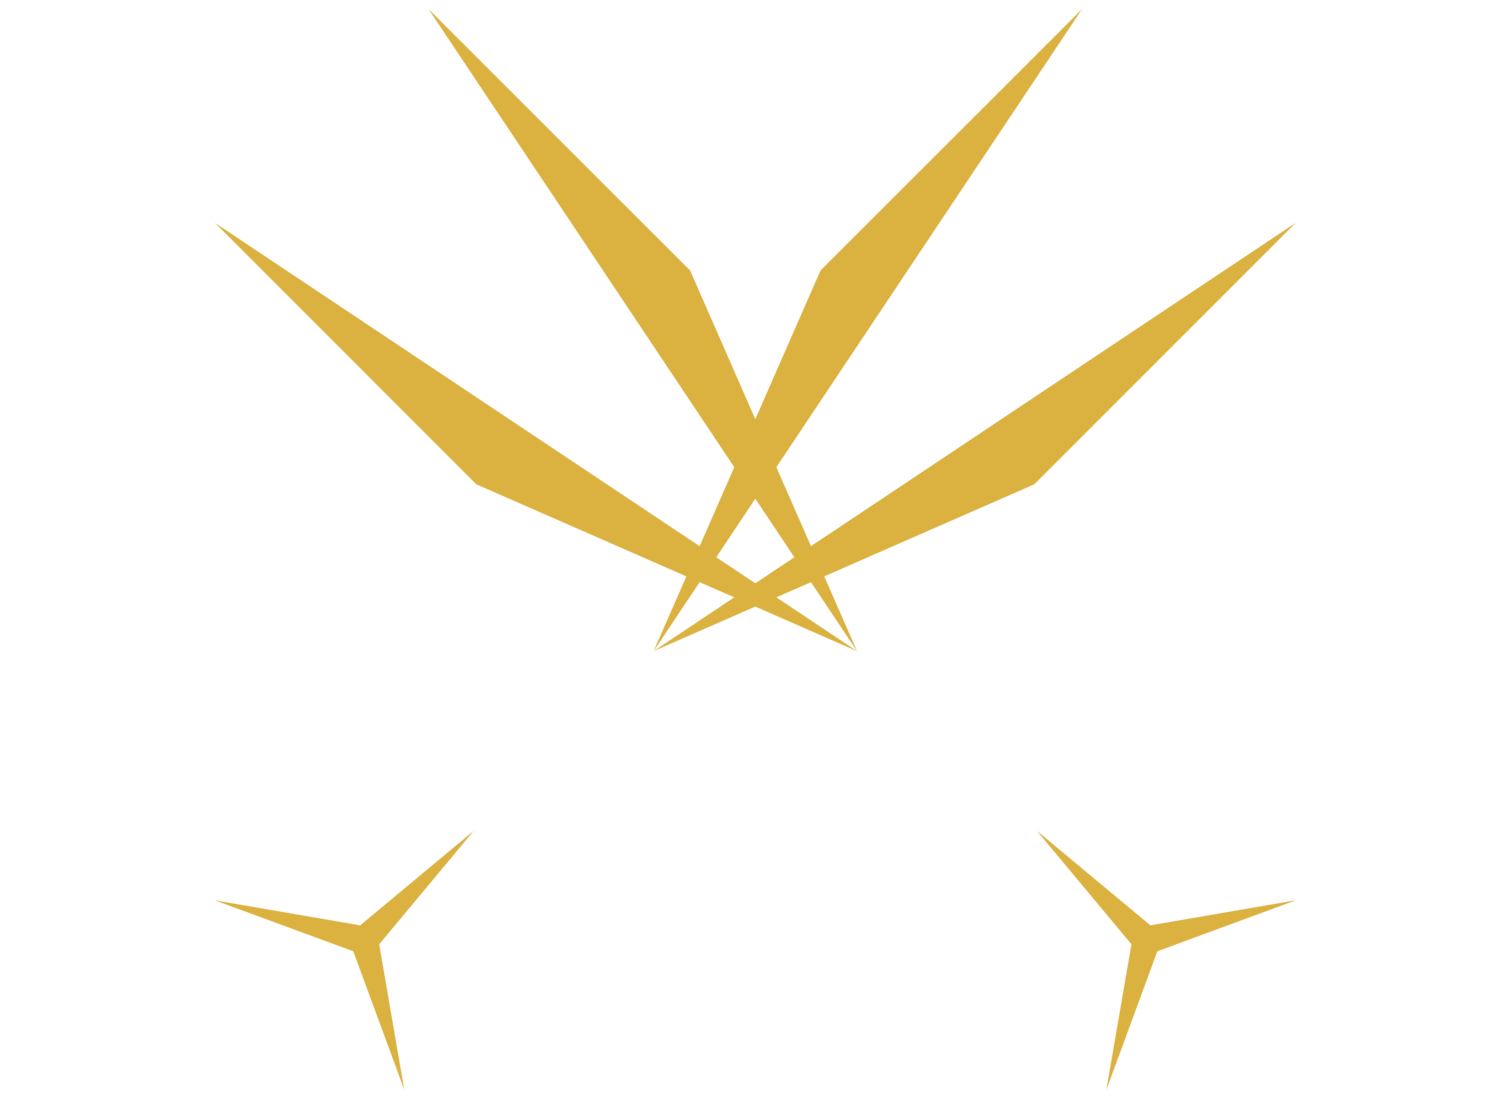 Champagne Dreads - Innovative reggae hybrid on another level